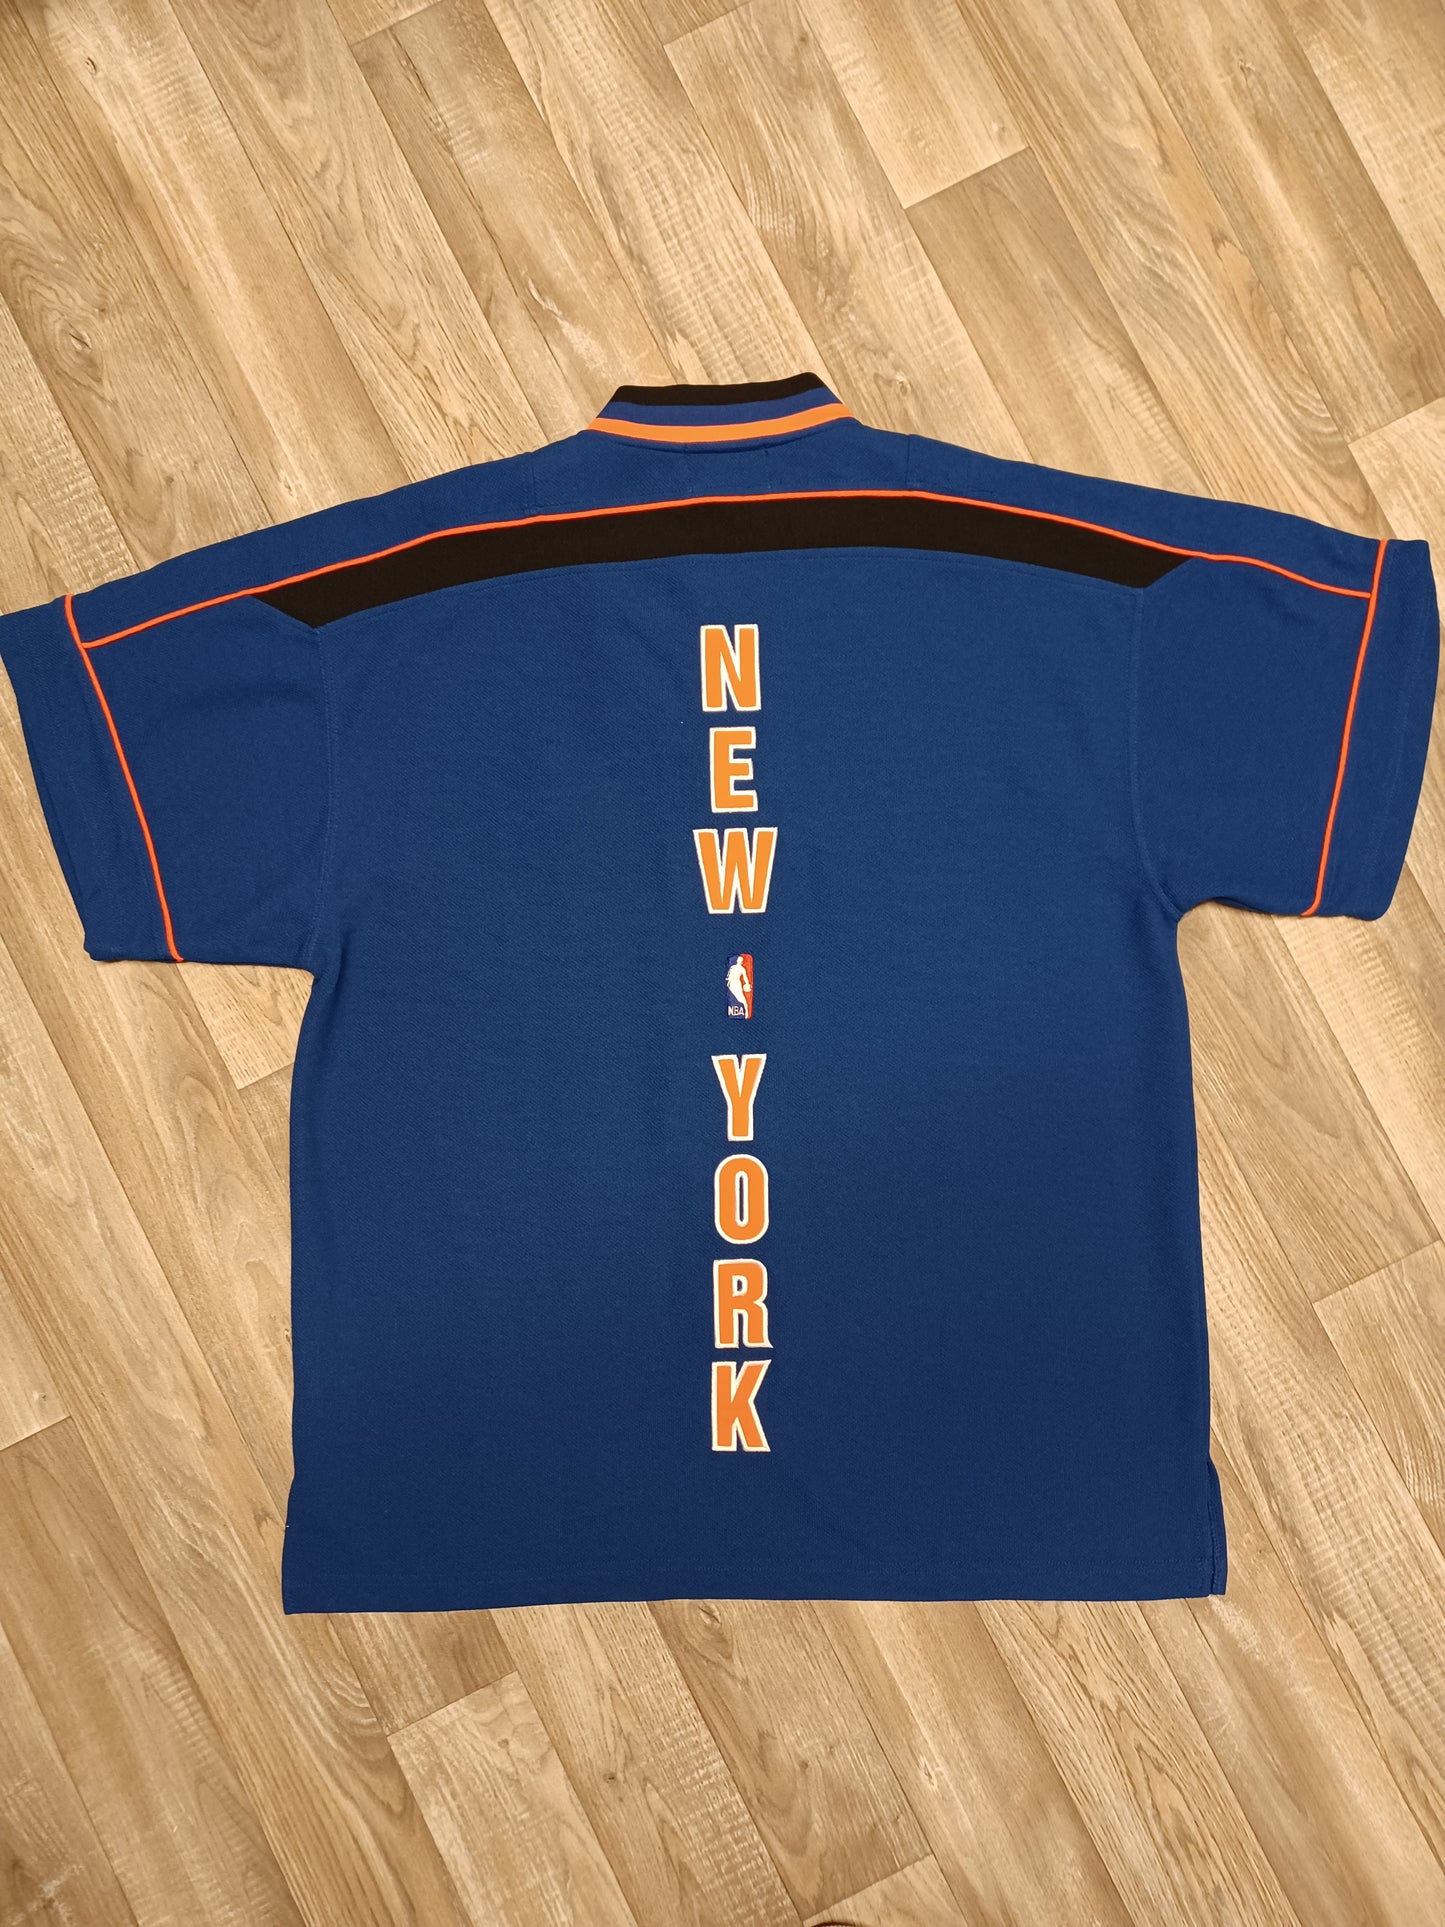 New York Knicks Warm Up Size Large